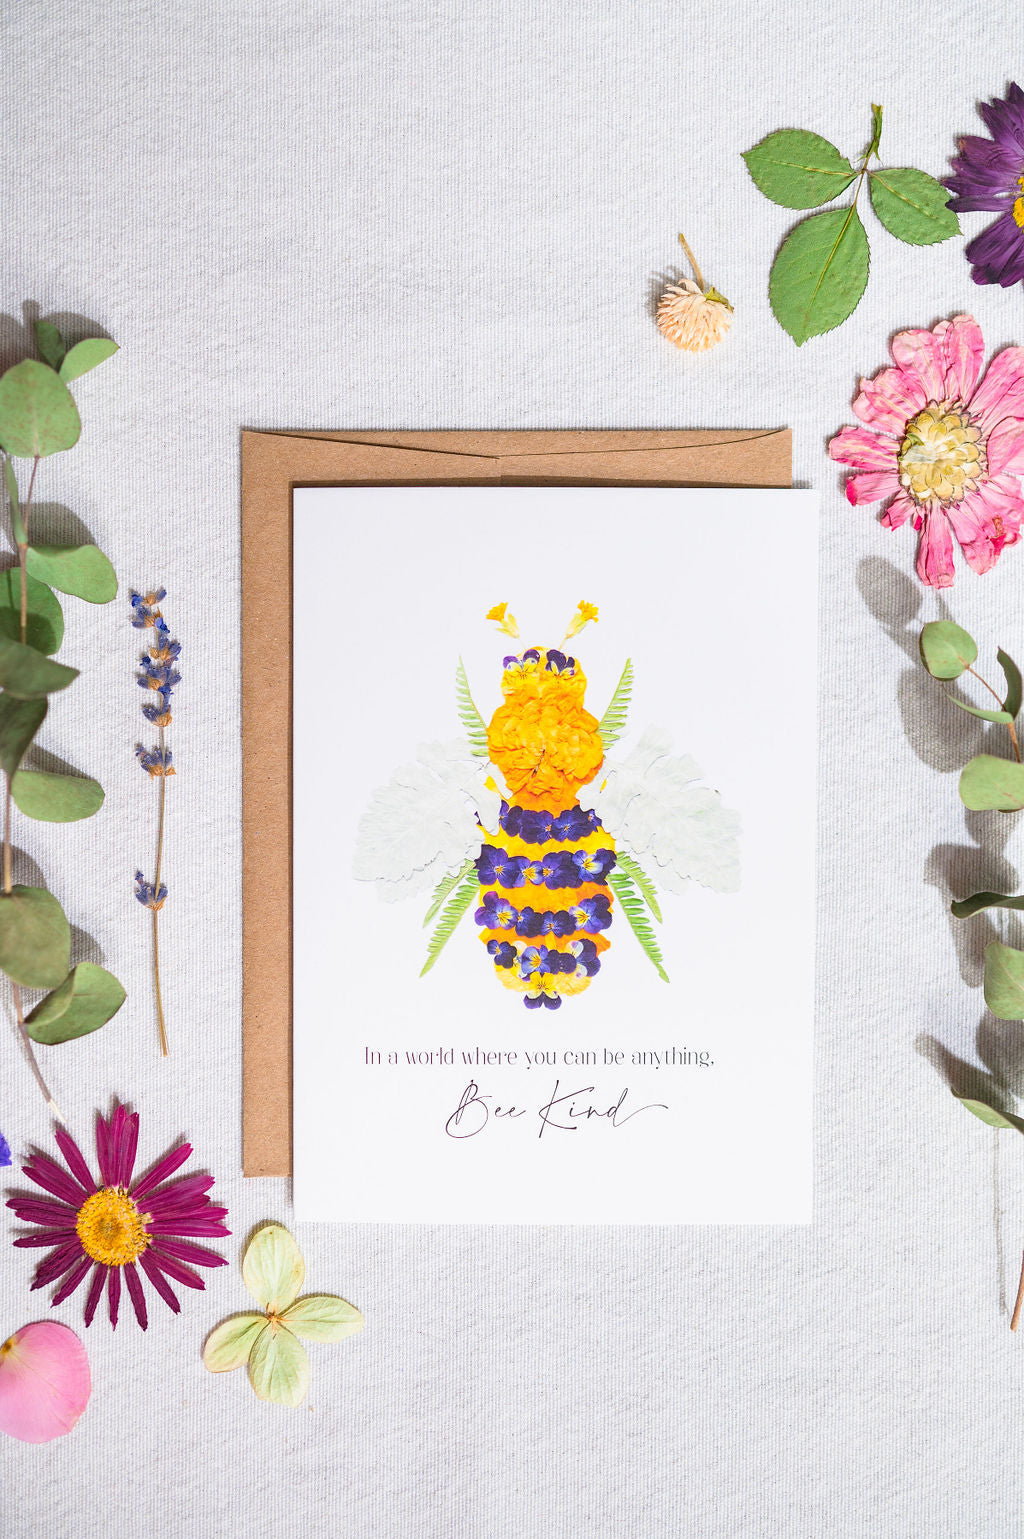 Bee Kind, Pressed Flower Bee, Everyday Encouragement, Greeting Card